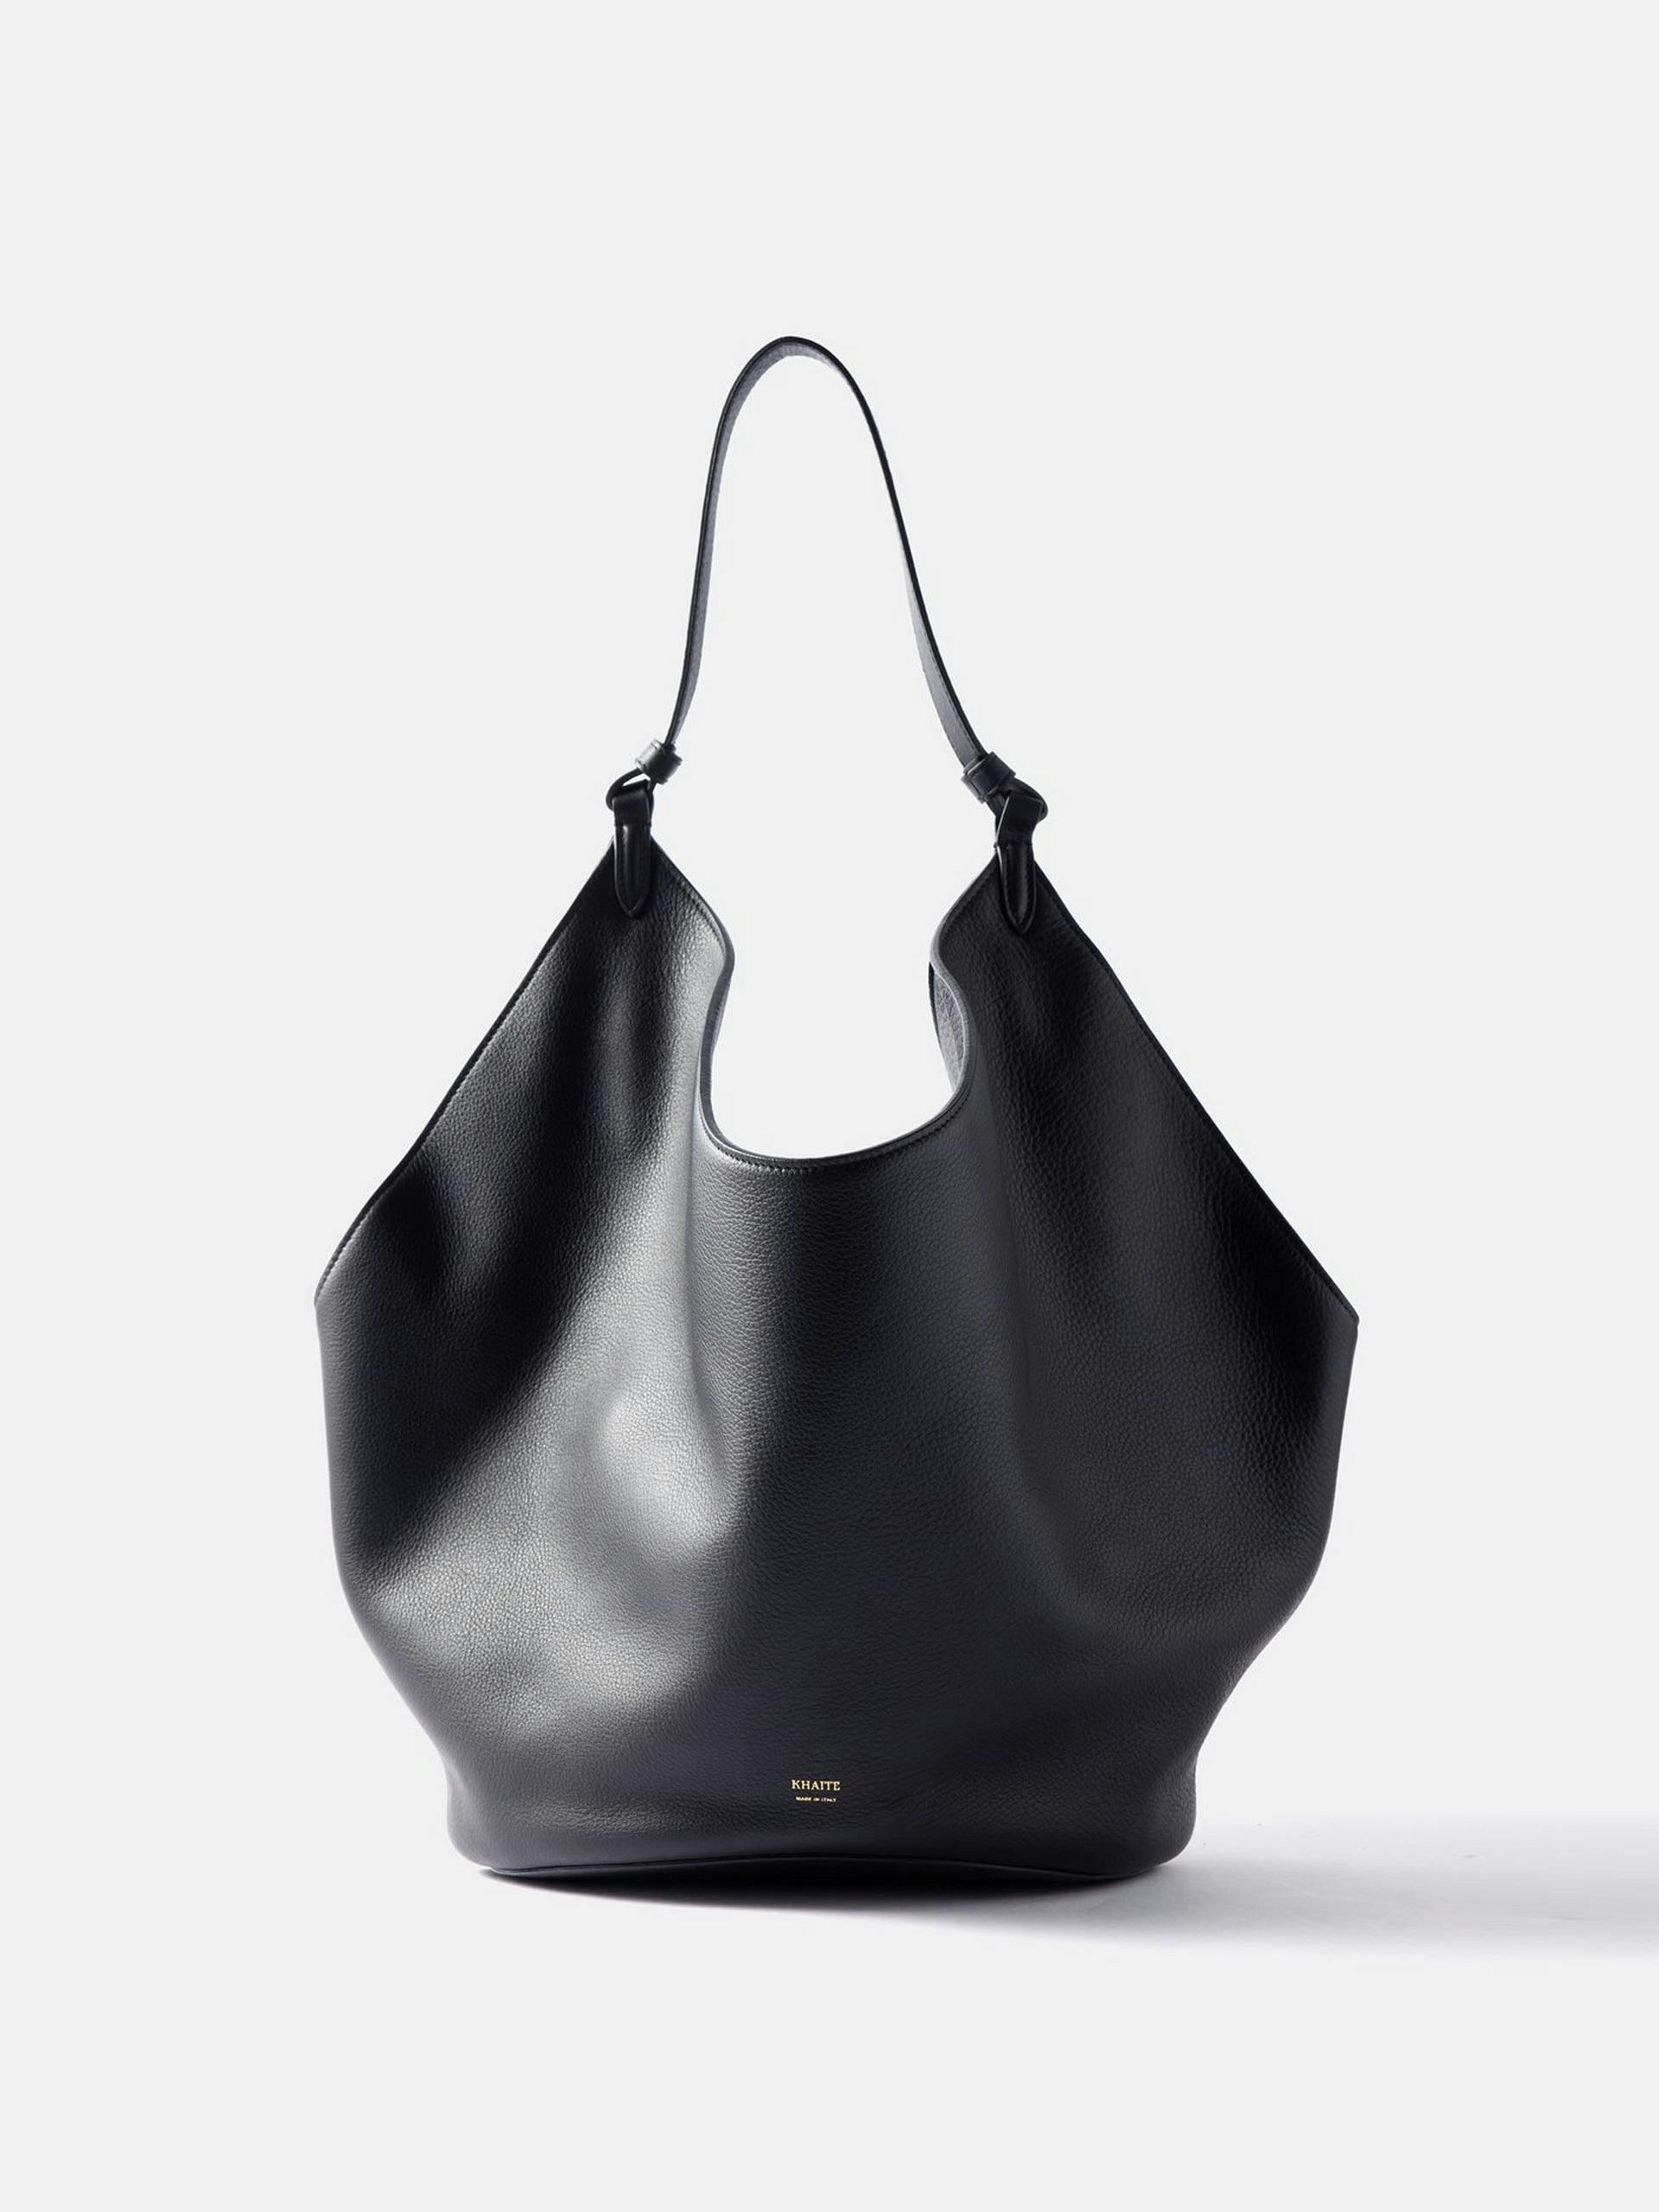 Lotus medium leather tote bag